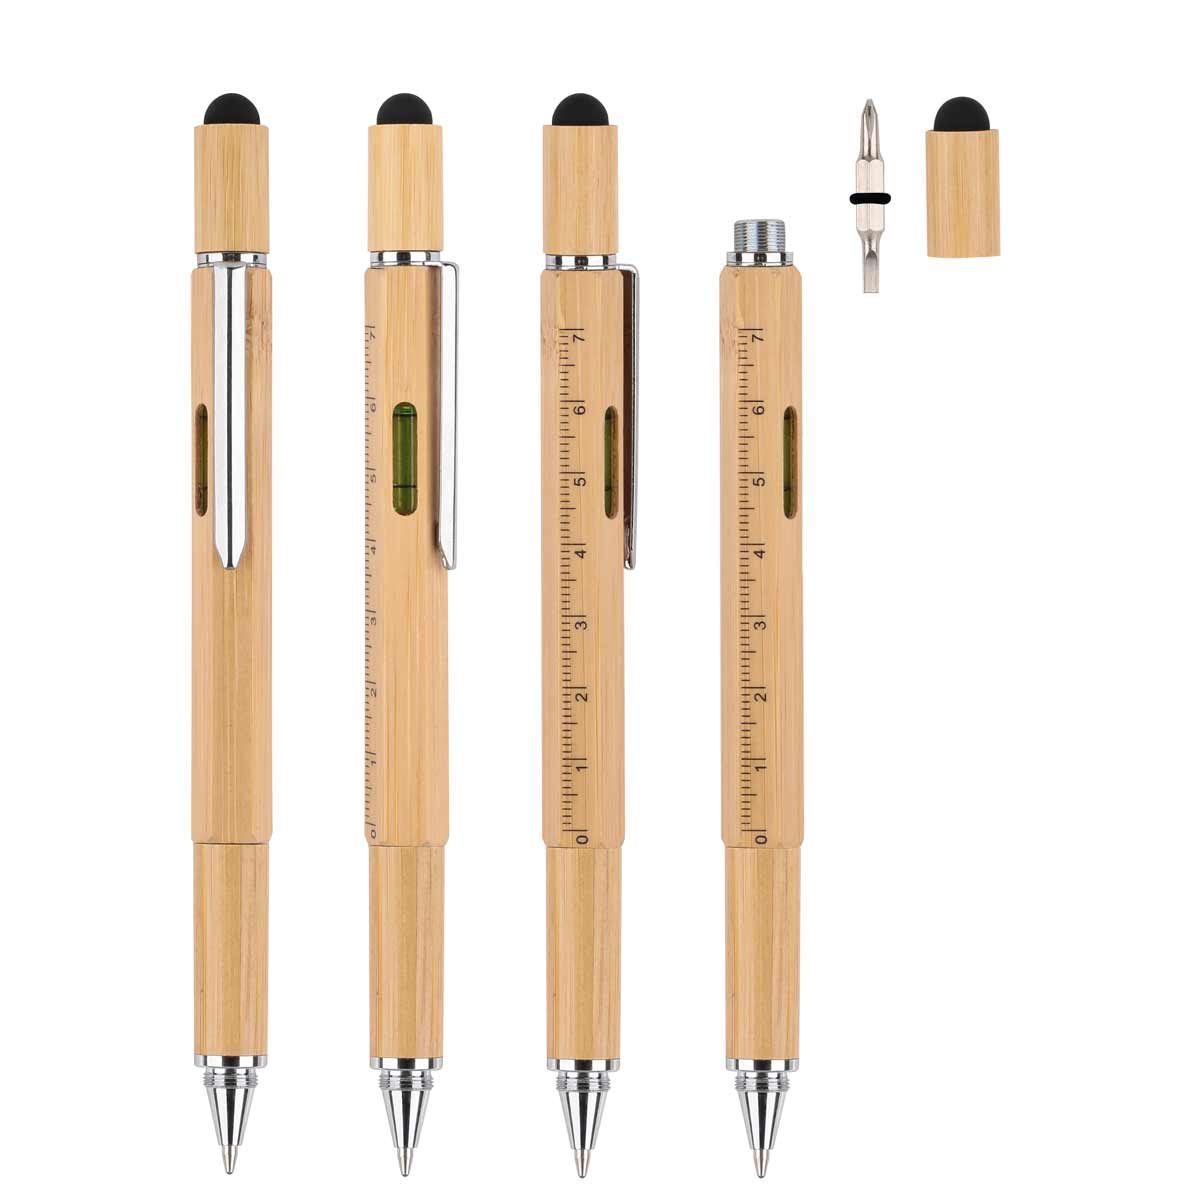 5 in 1 Multi Function Tooling Pen